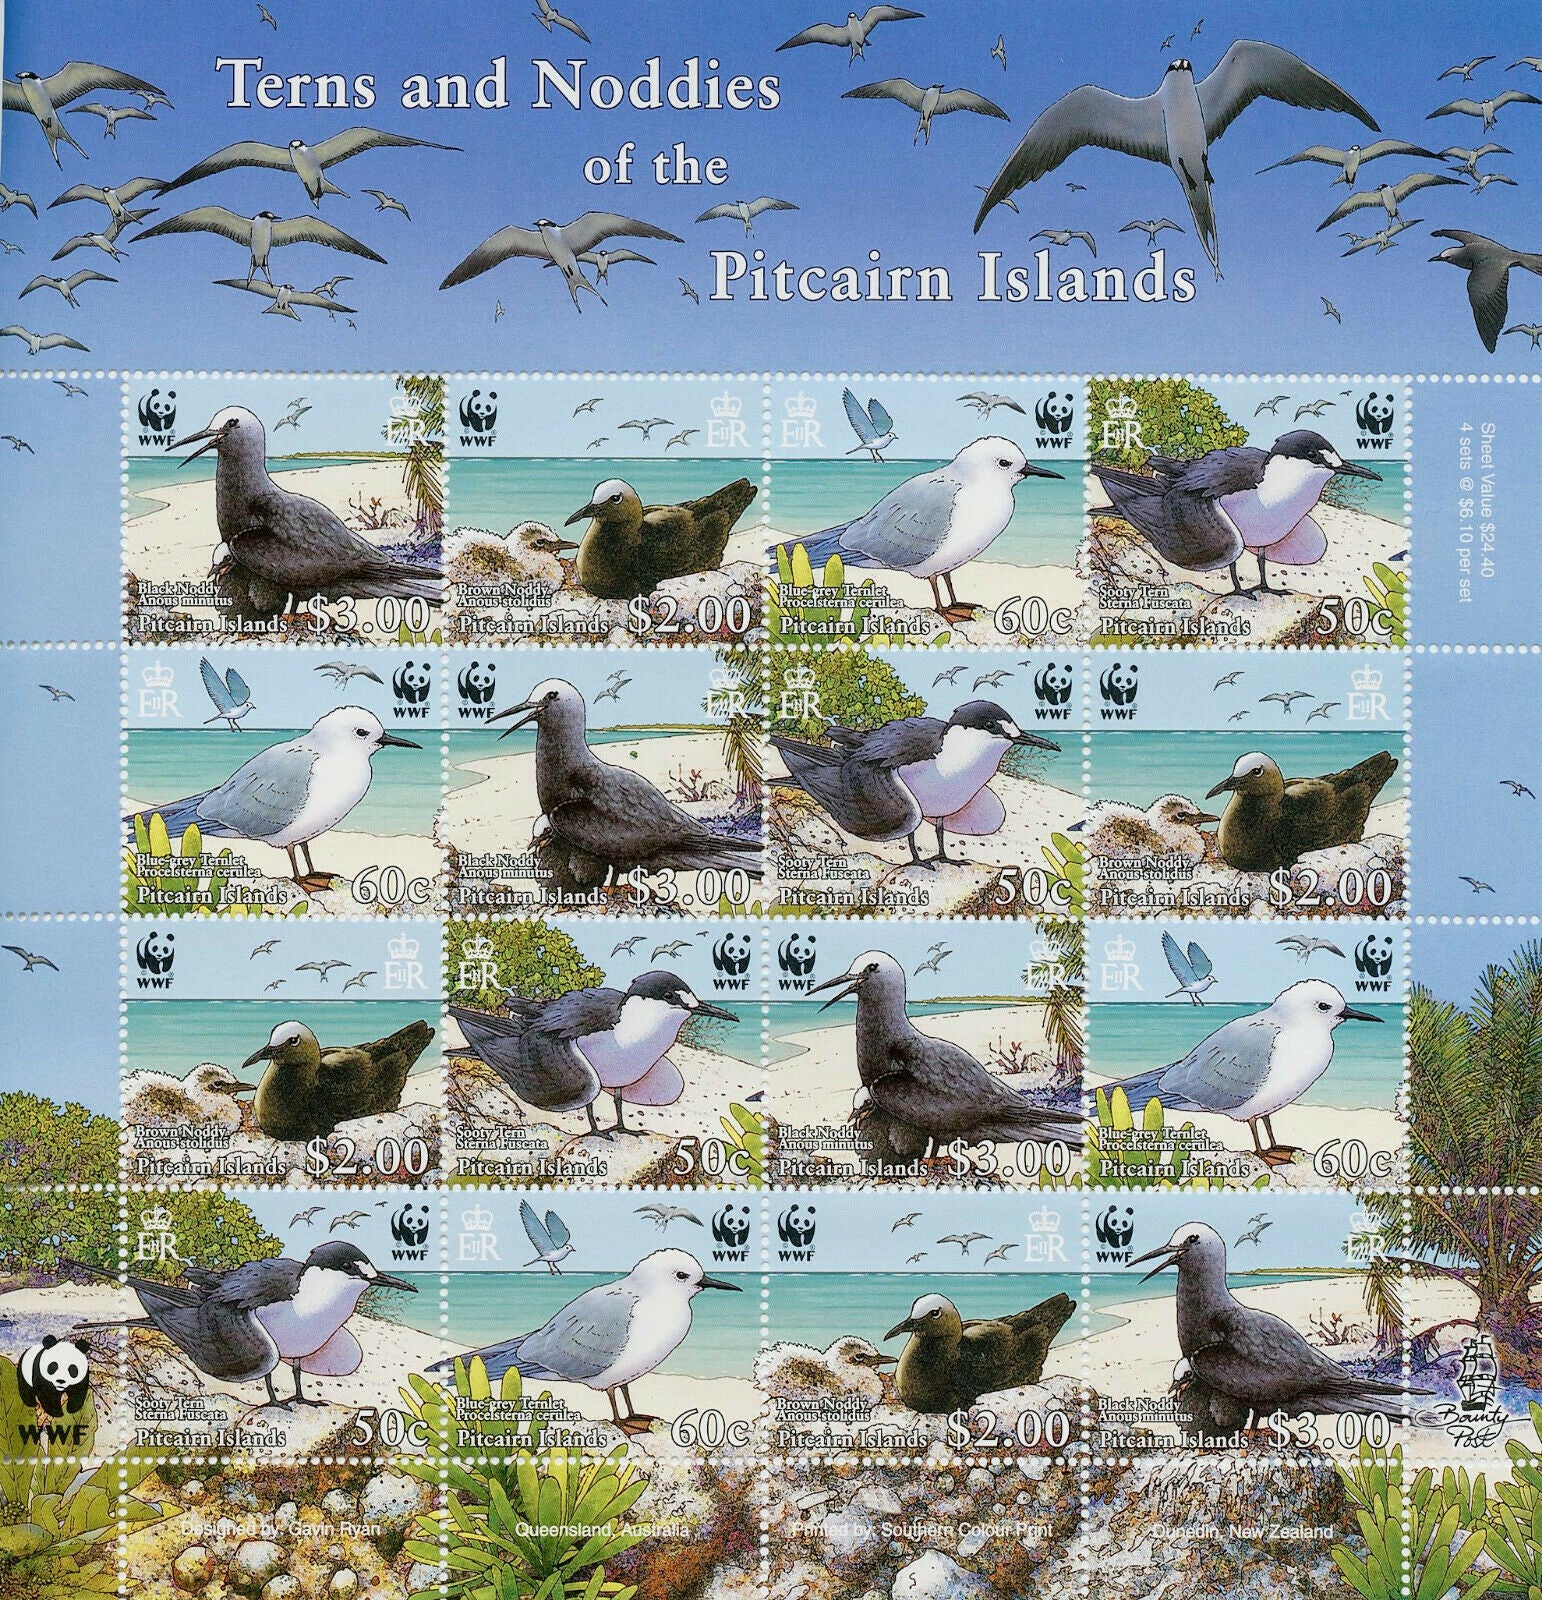 Pitcairn Islands 2007 MNH WWF Stamps Terns & Noddies Sooty Tern Birds 16v M/S